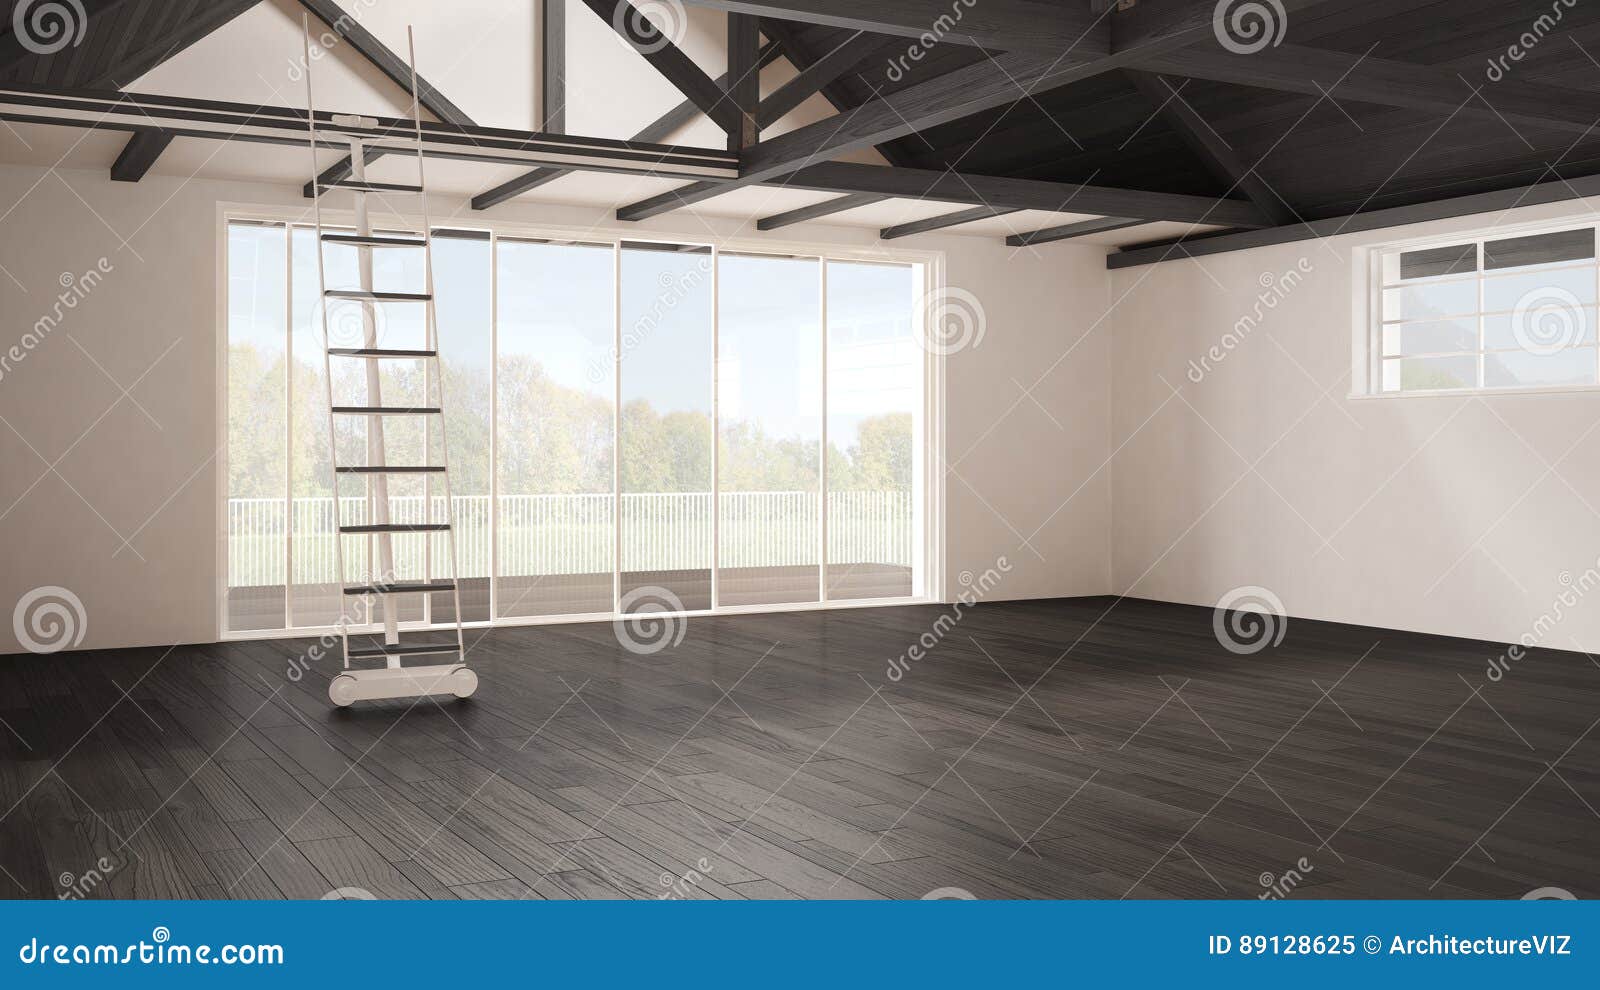 Minimalist Mezzanine Loft Empty Industrial Space Wooden Roofing